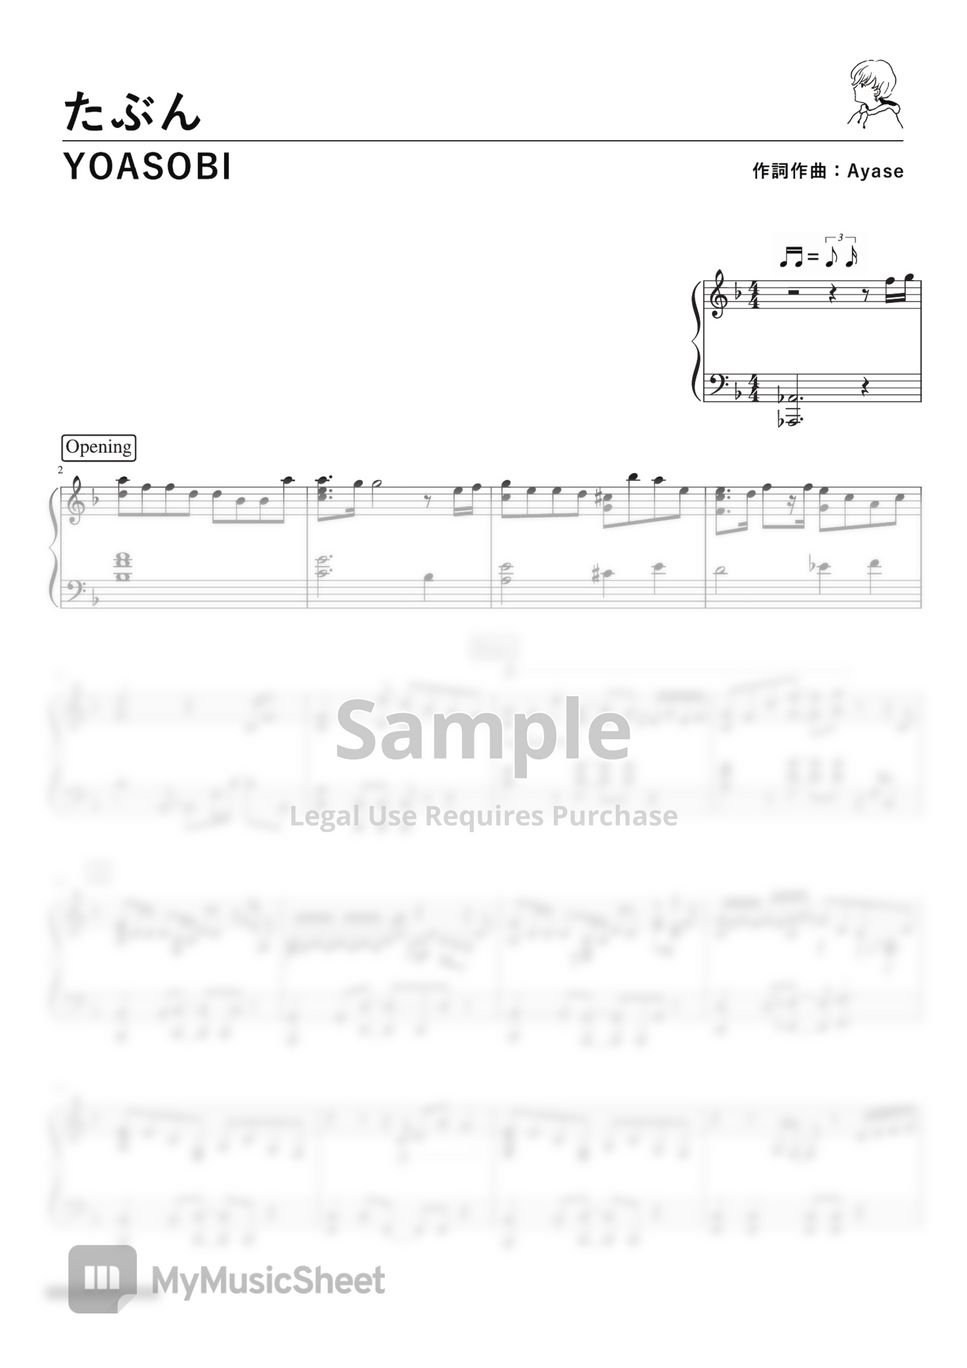 YOASOBI - Probably (PianoSolo) by Fukane